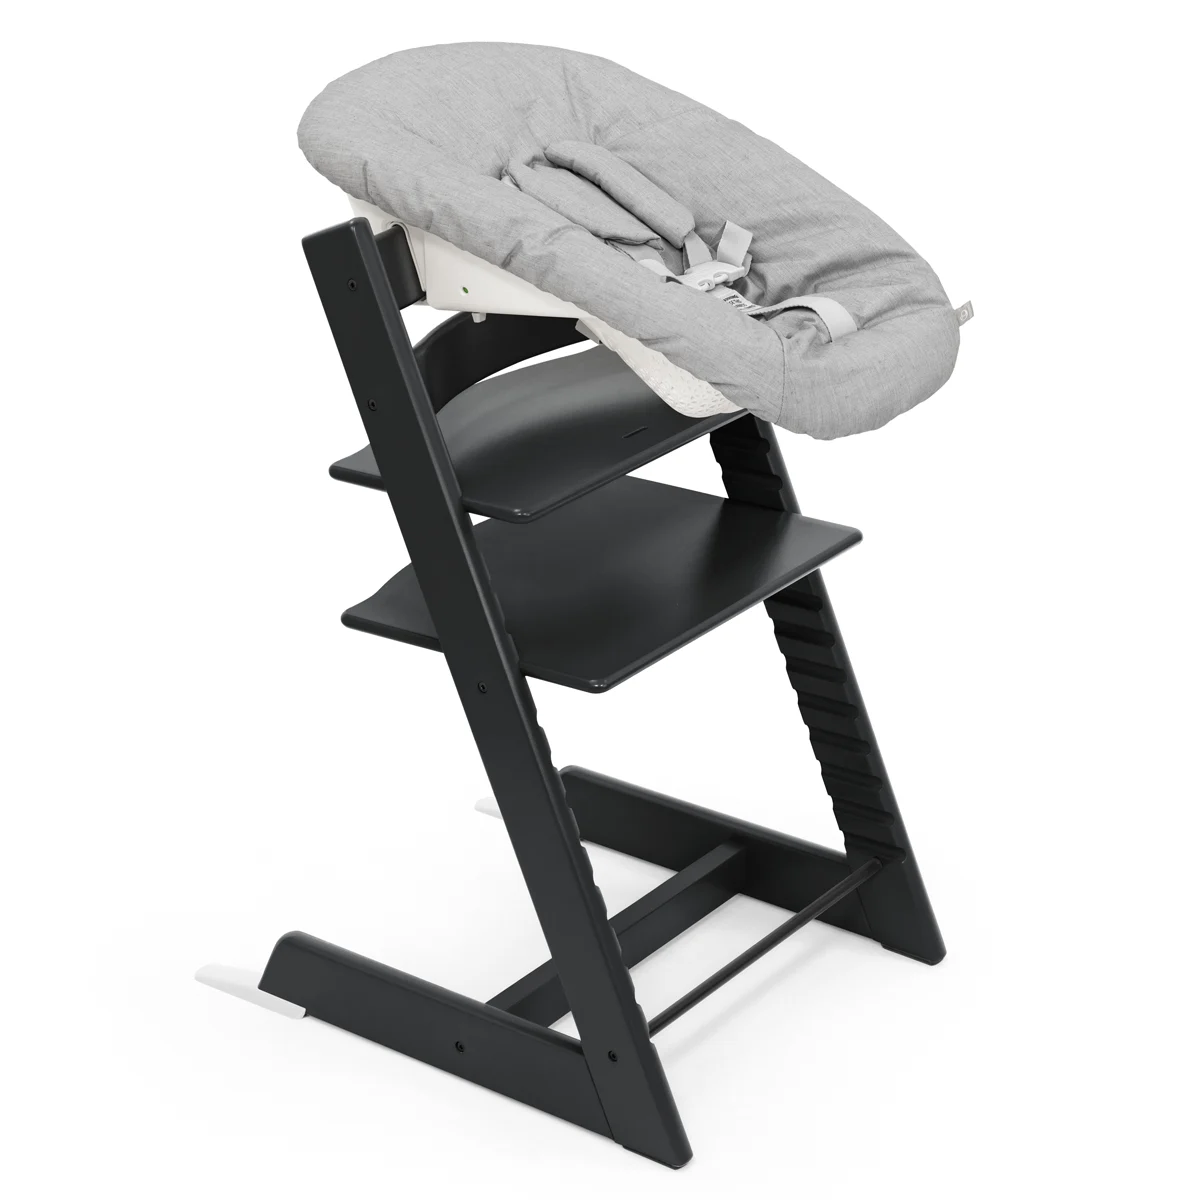 Набор Stokke Newborn Tripp Trapp Black: стульчик и кресло для новорожденных (k.100103.52) - фото 1